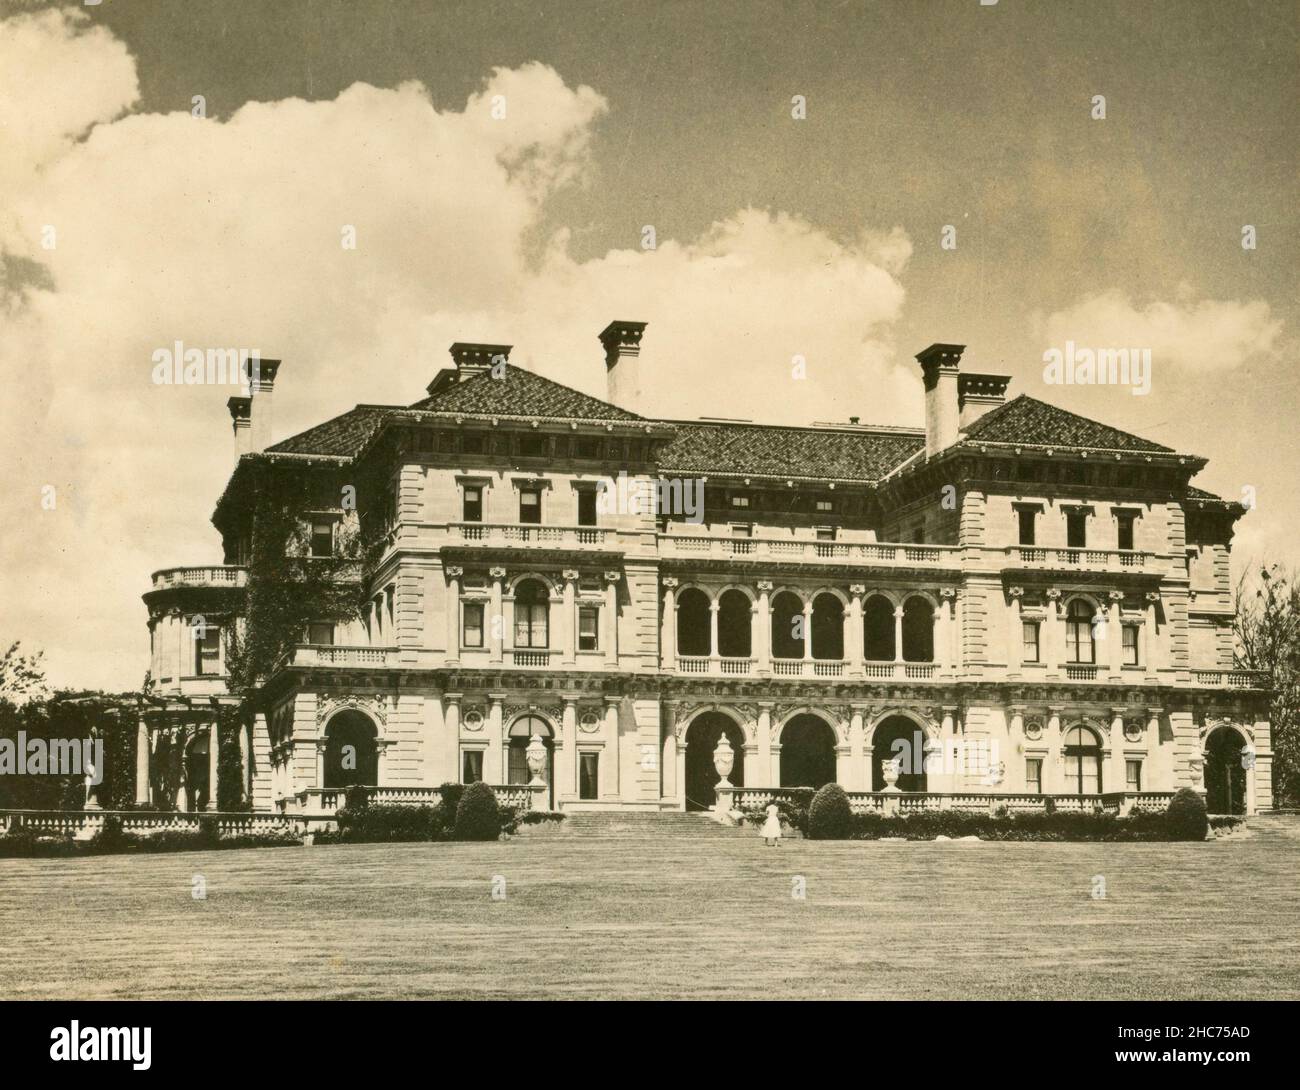 Side View of The Breakers Mansion, built by Cornelius Vanderbilt, Newport, Rhode Island USA 1940s Stock Photo